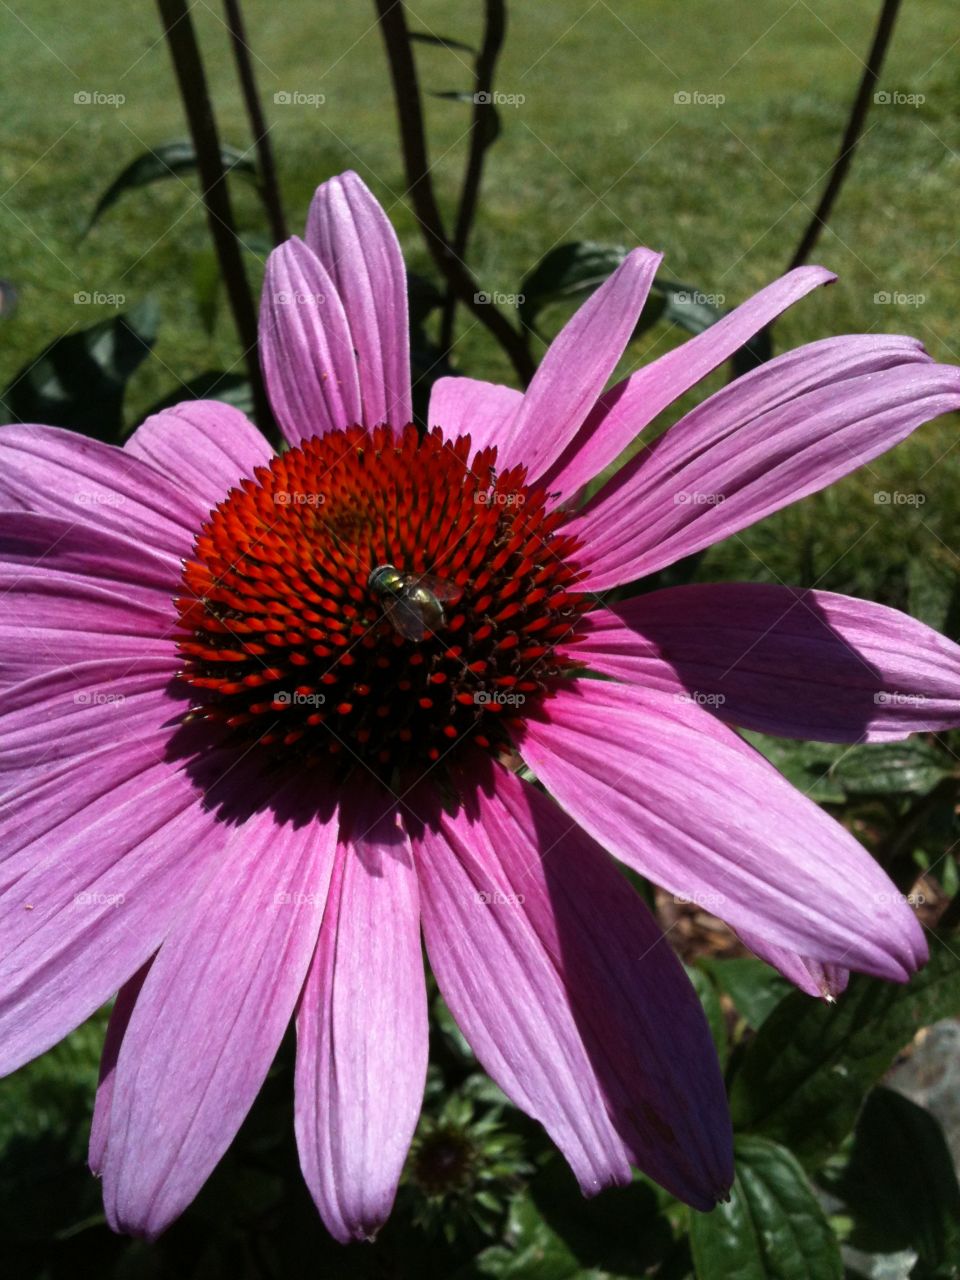 Flower bee